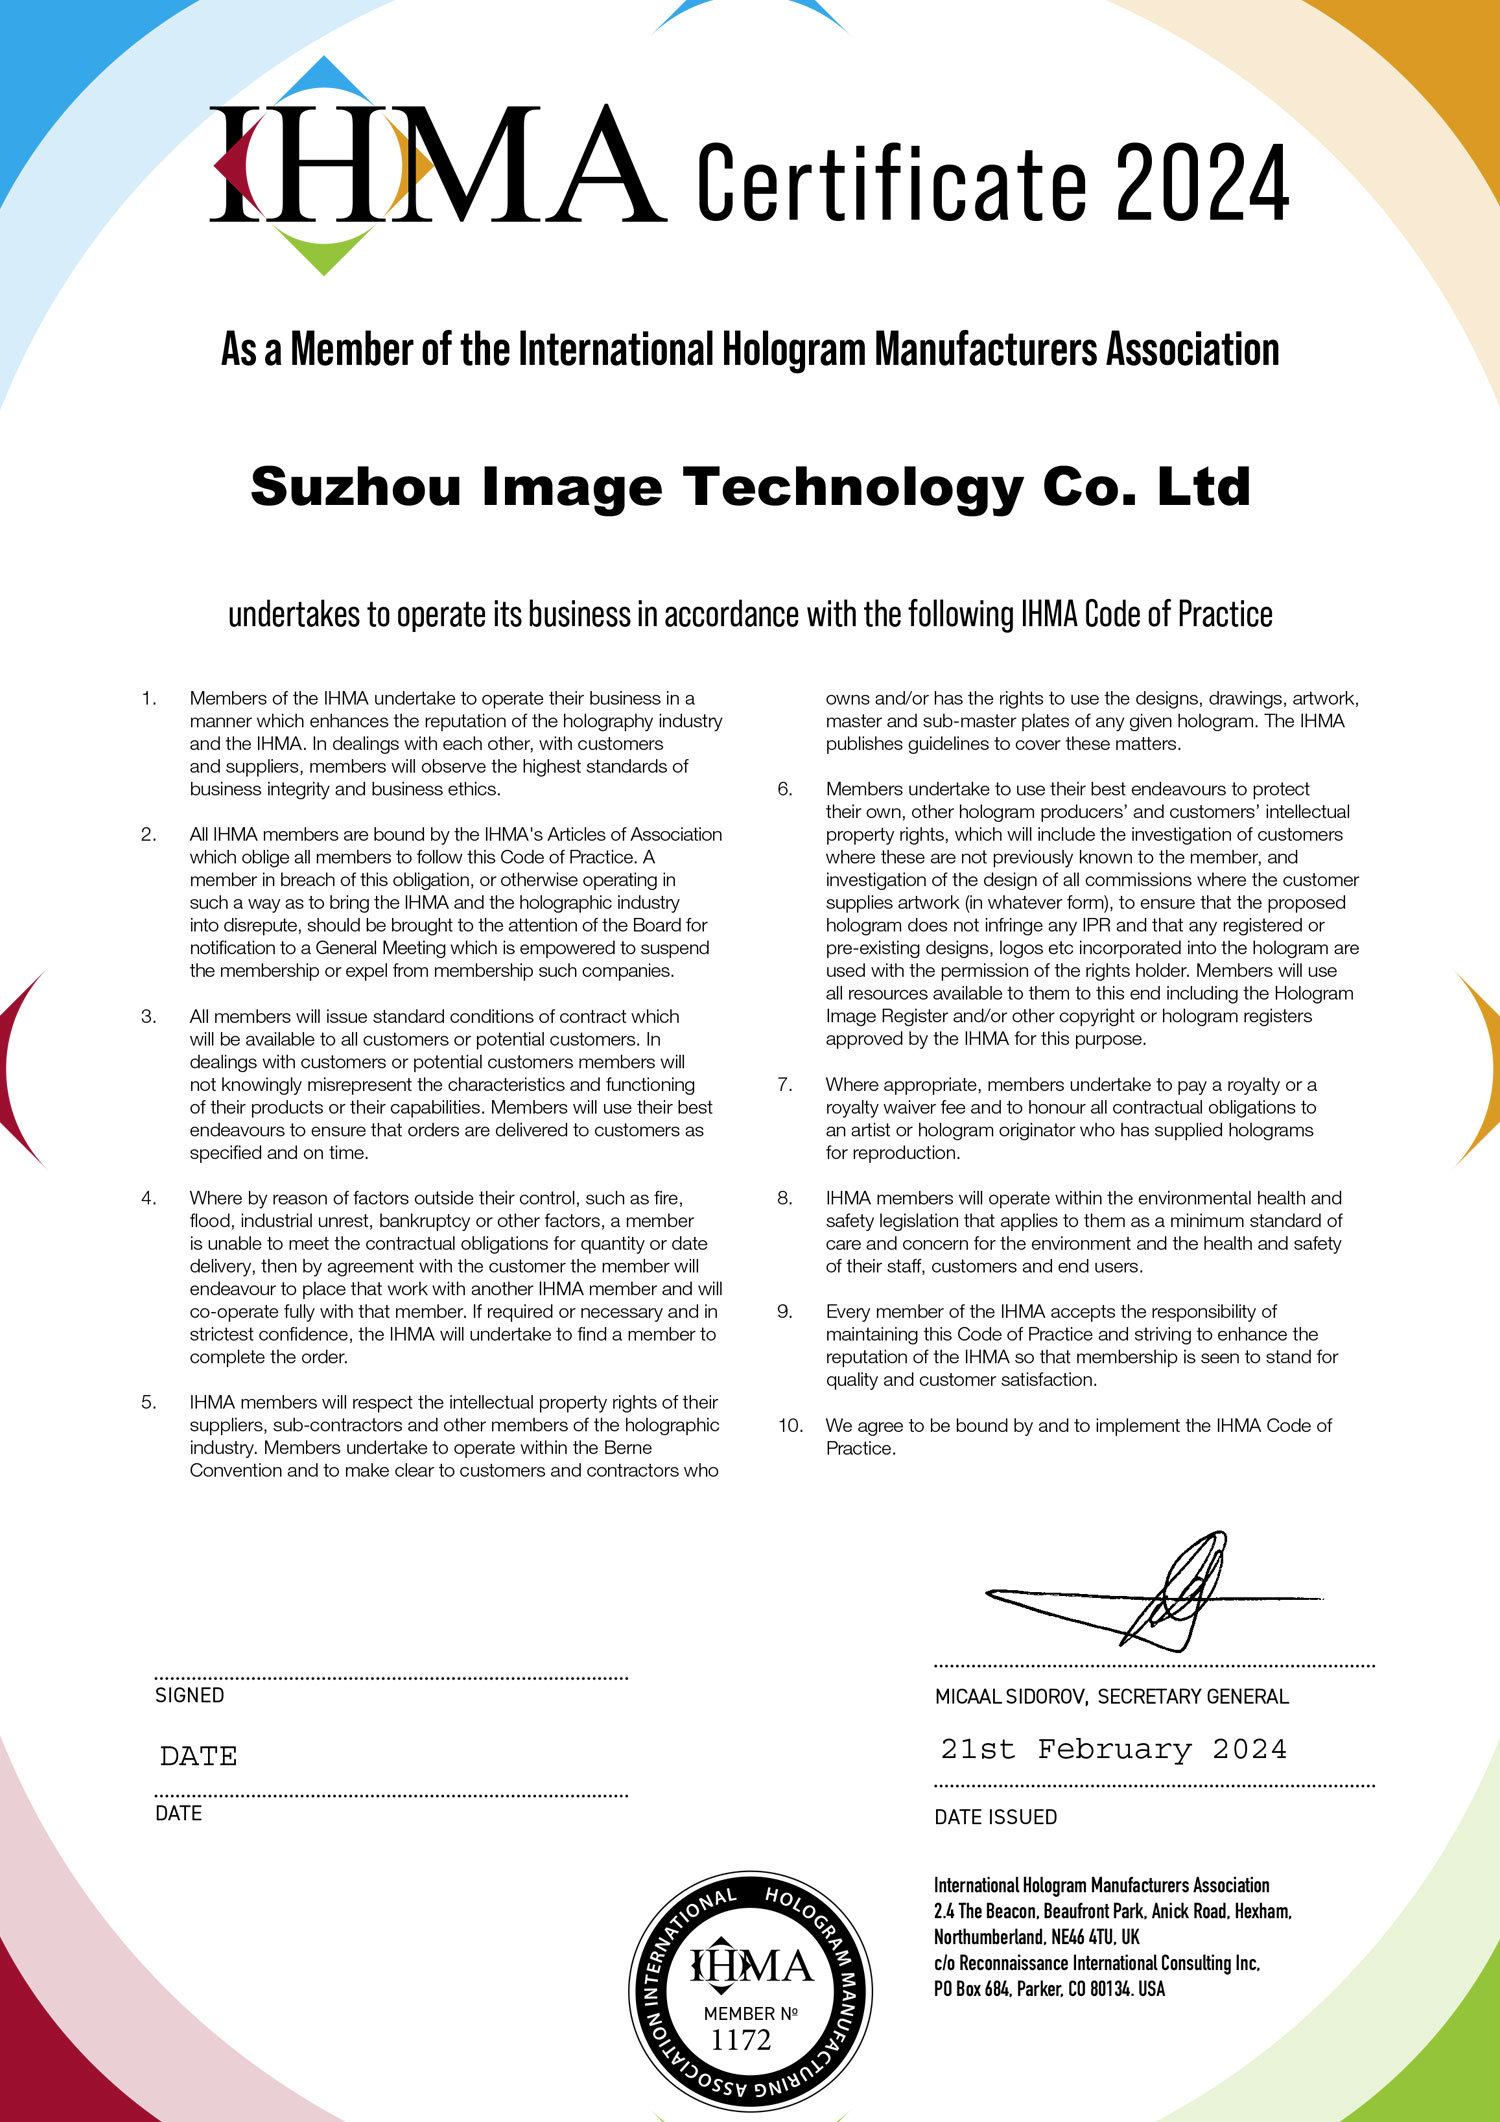 Suzhou Image Technology, a member of IHMA